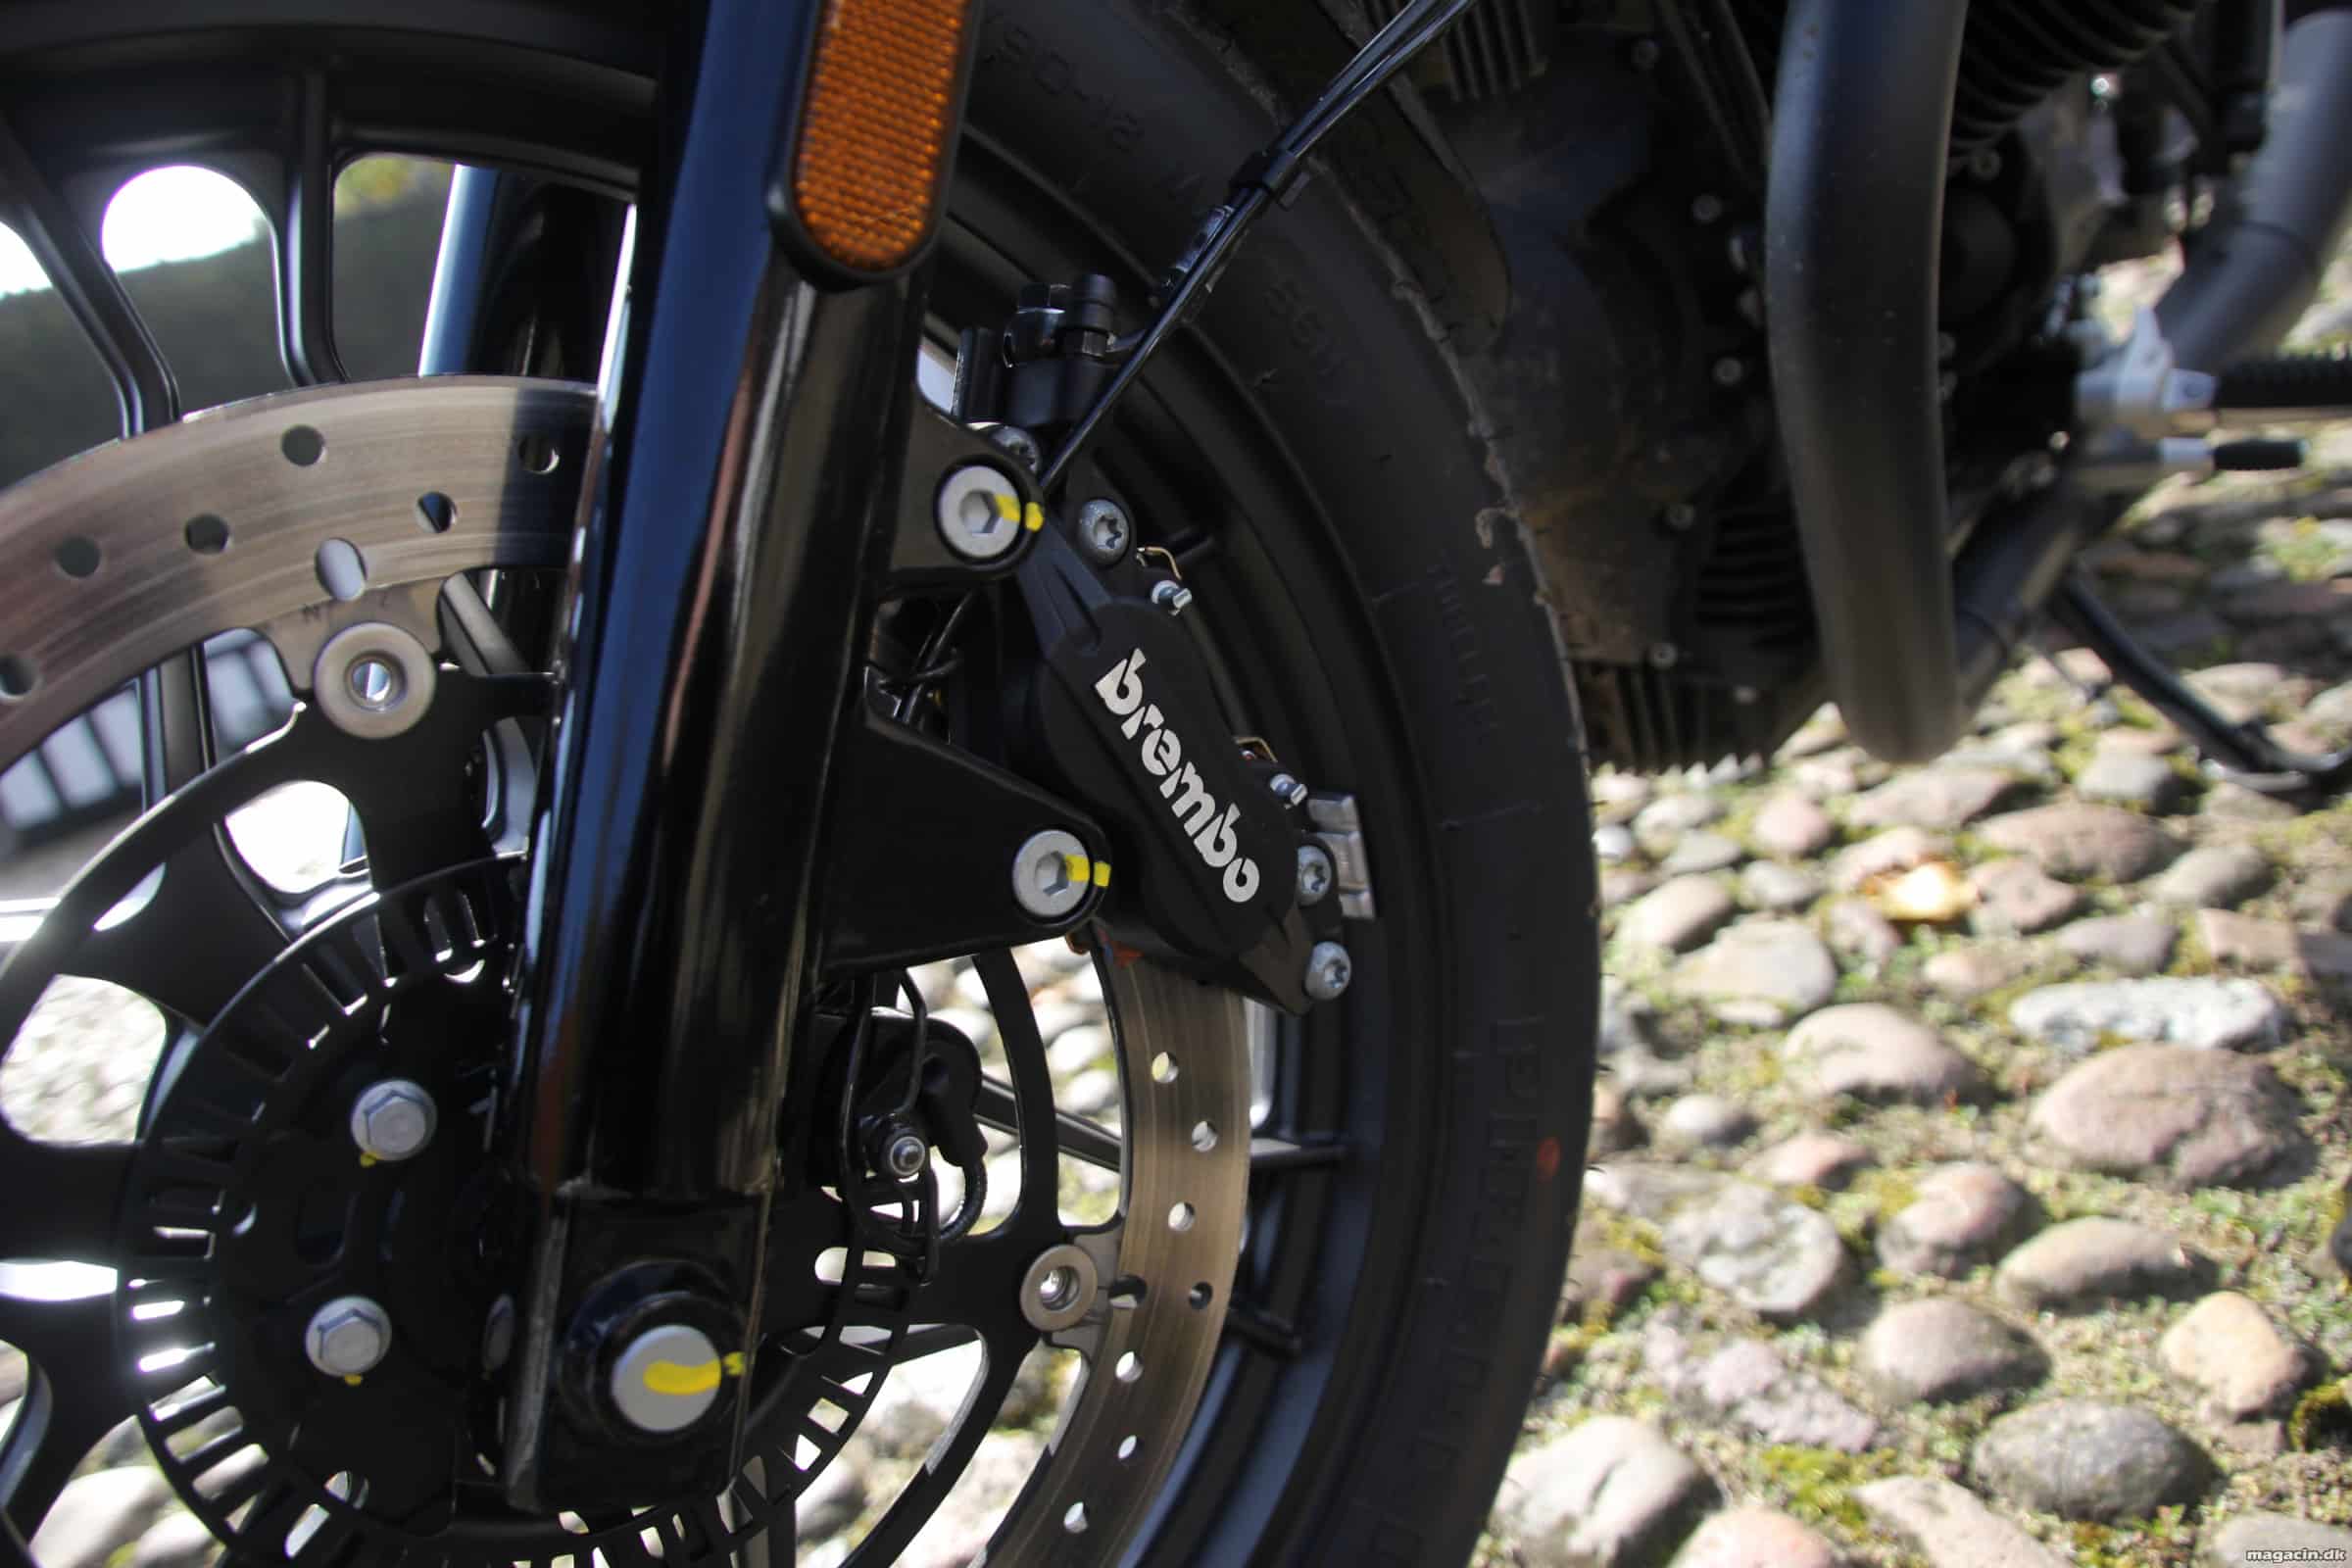 Test: 2019 Moto Guzzi V7 III Stone Led